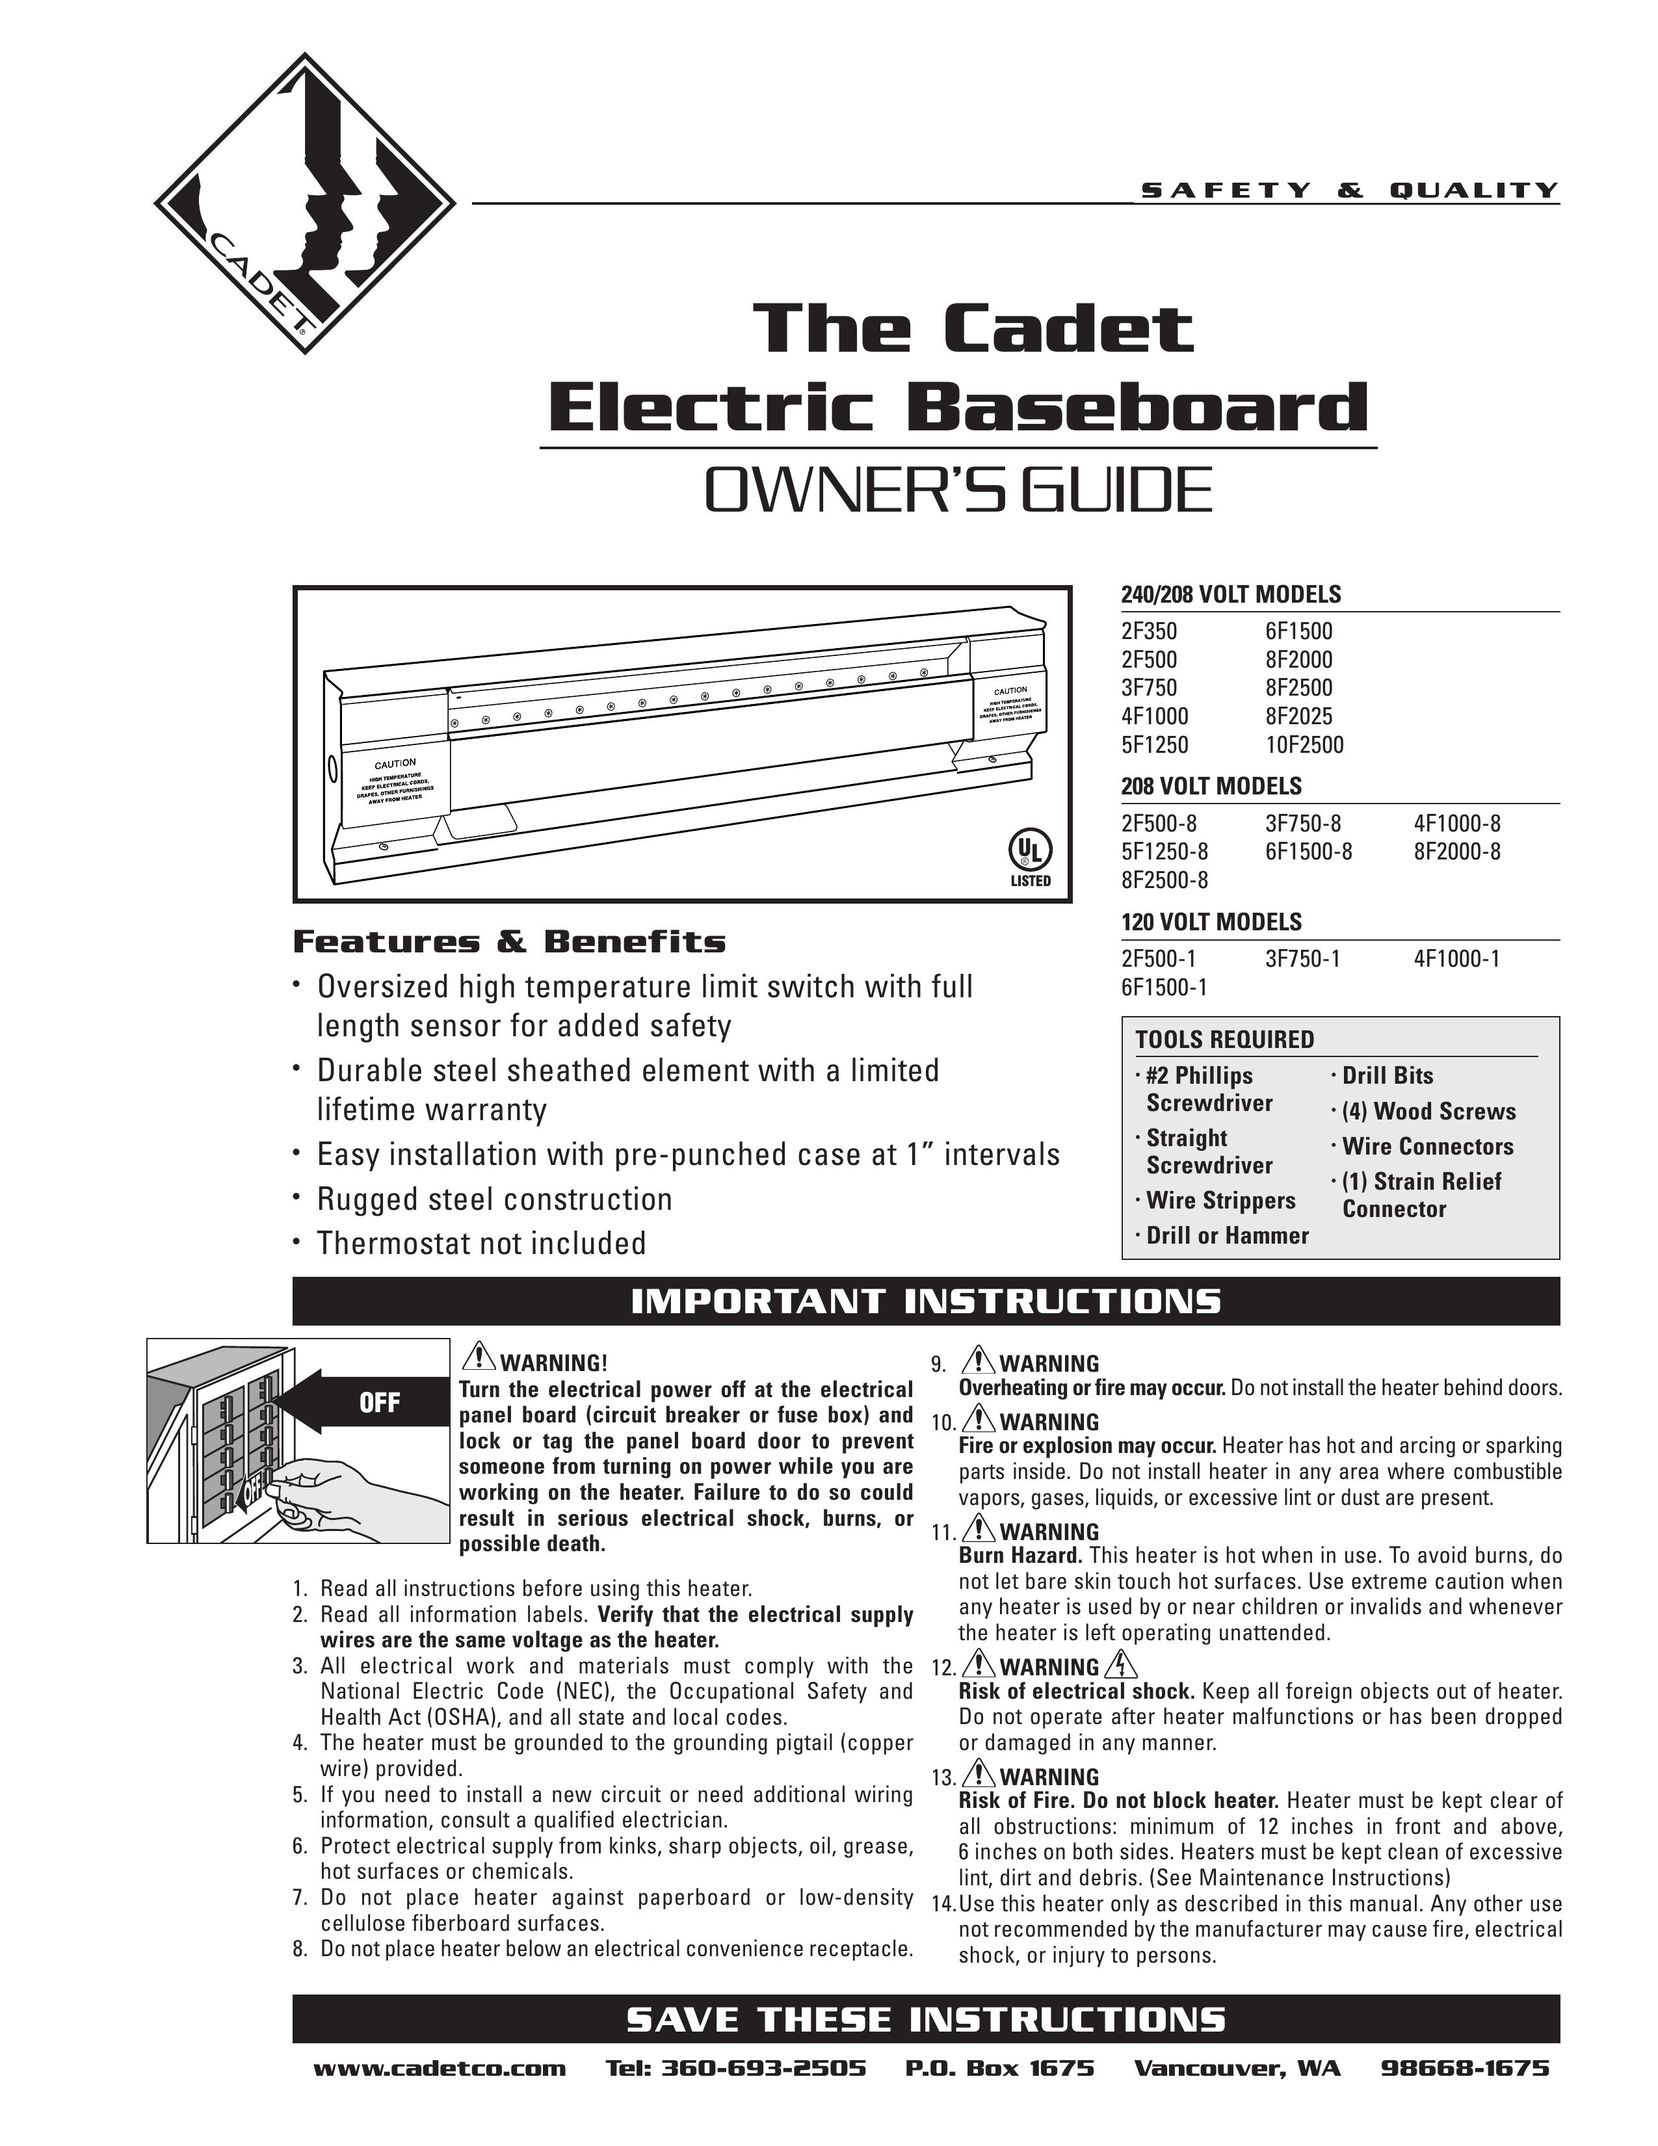 Cadet 6F1500-8 Electric Heater User Manual